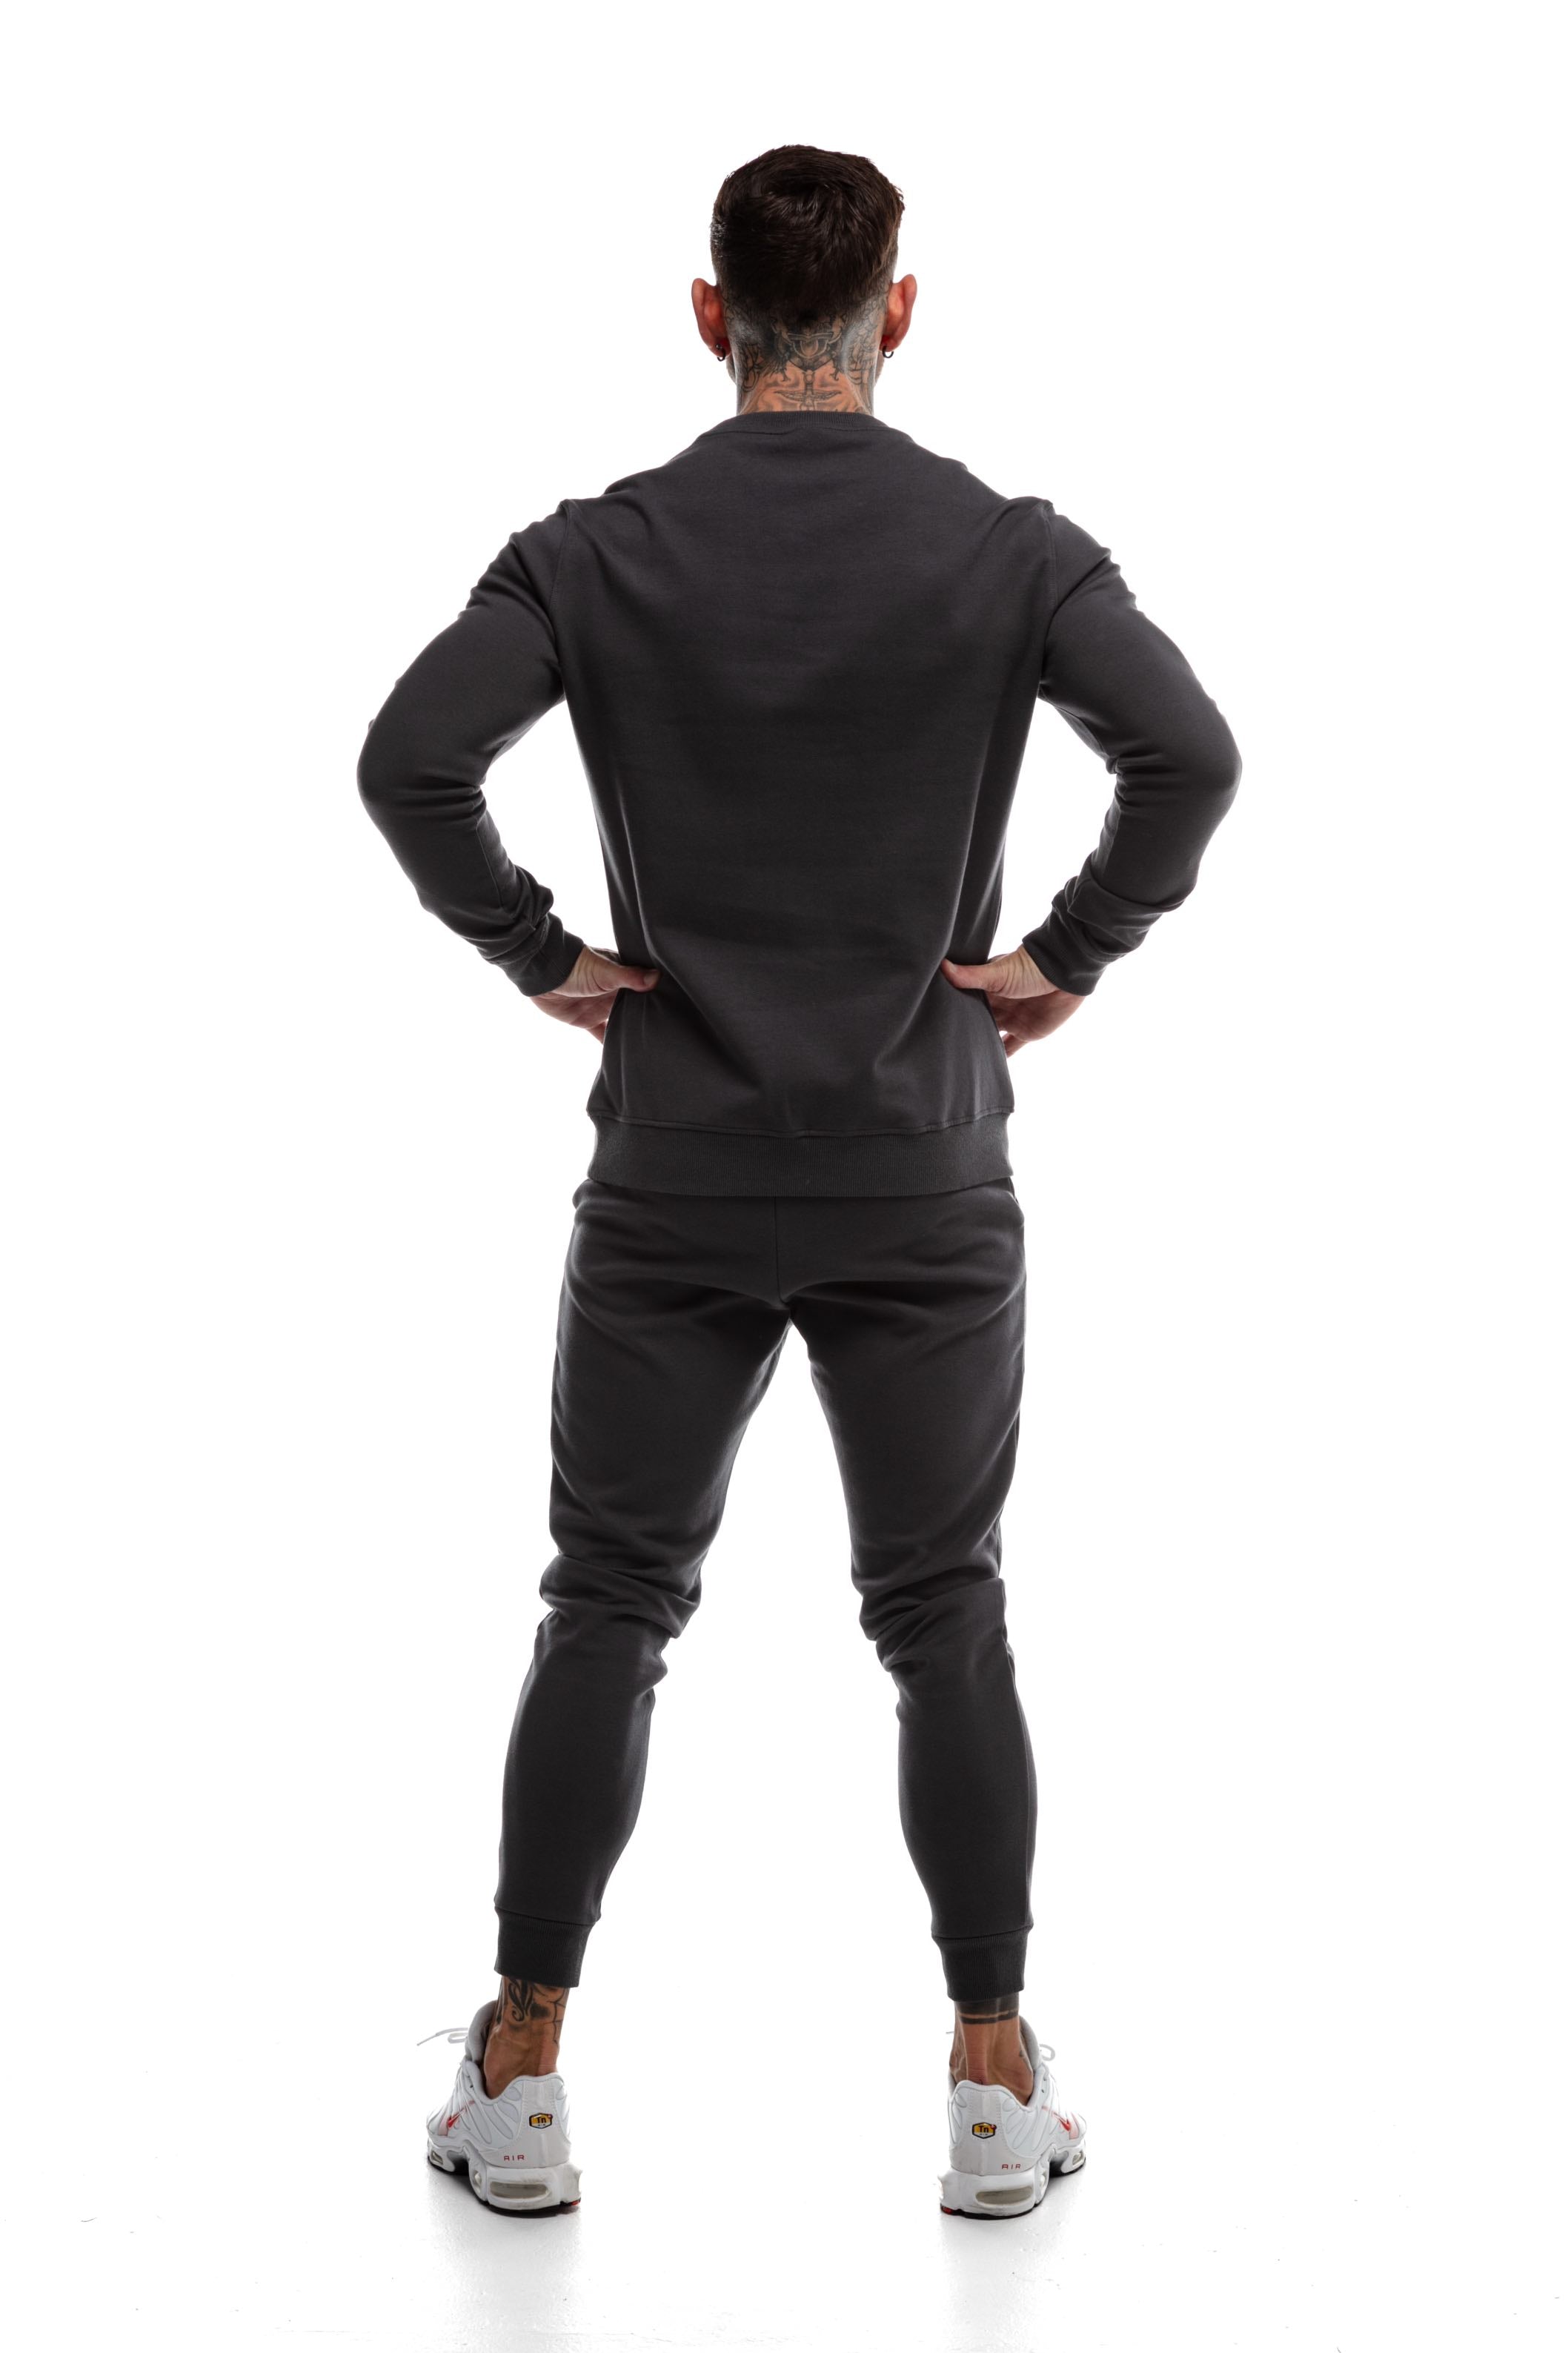 GymFreak Mens Power Sweatshirt - Charcoal